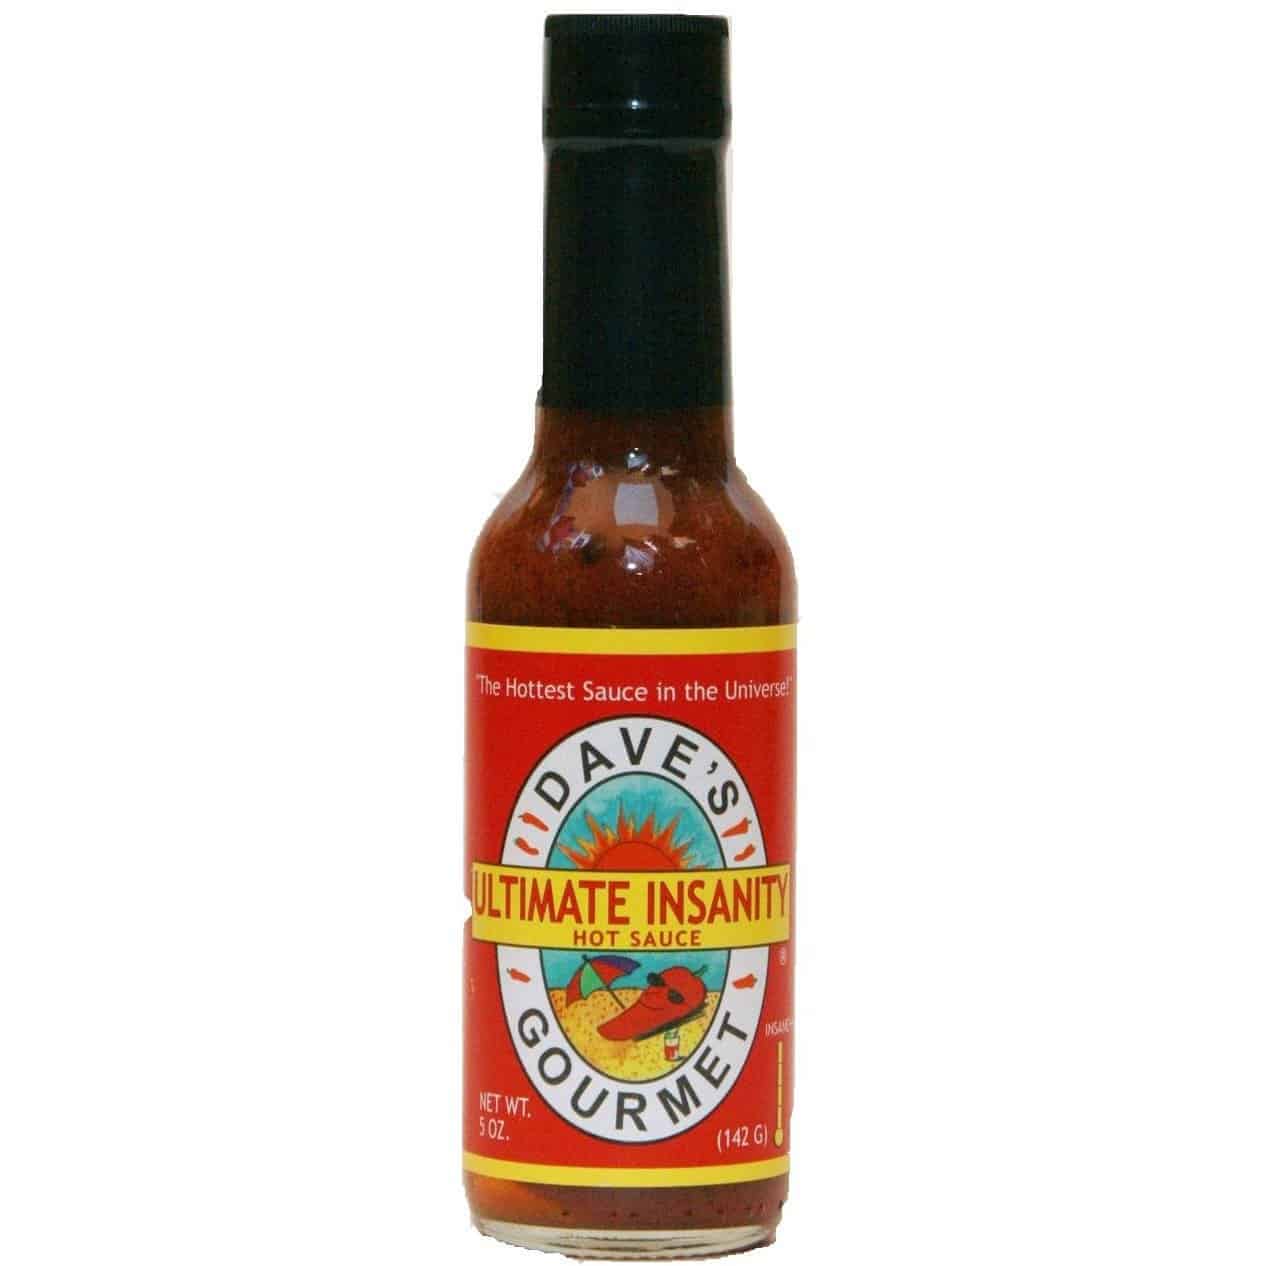 Dave's Ultimate Insanity Hot Sauce • Rustlin' Rob's Gourmet Texas Foods